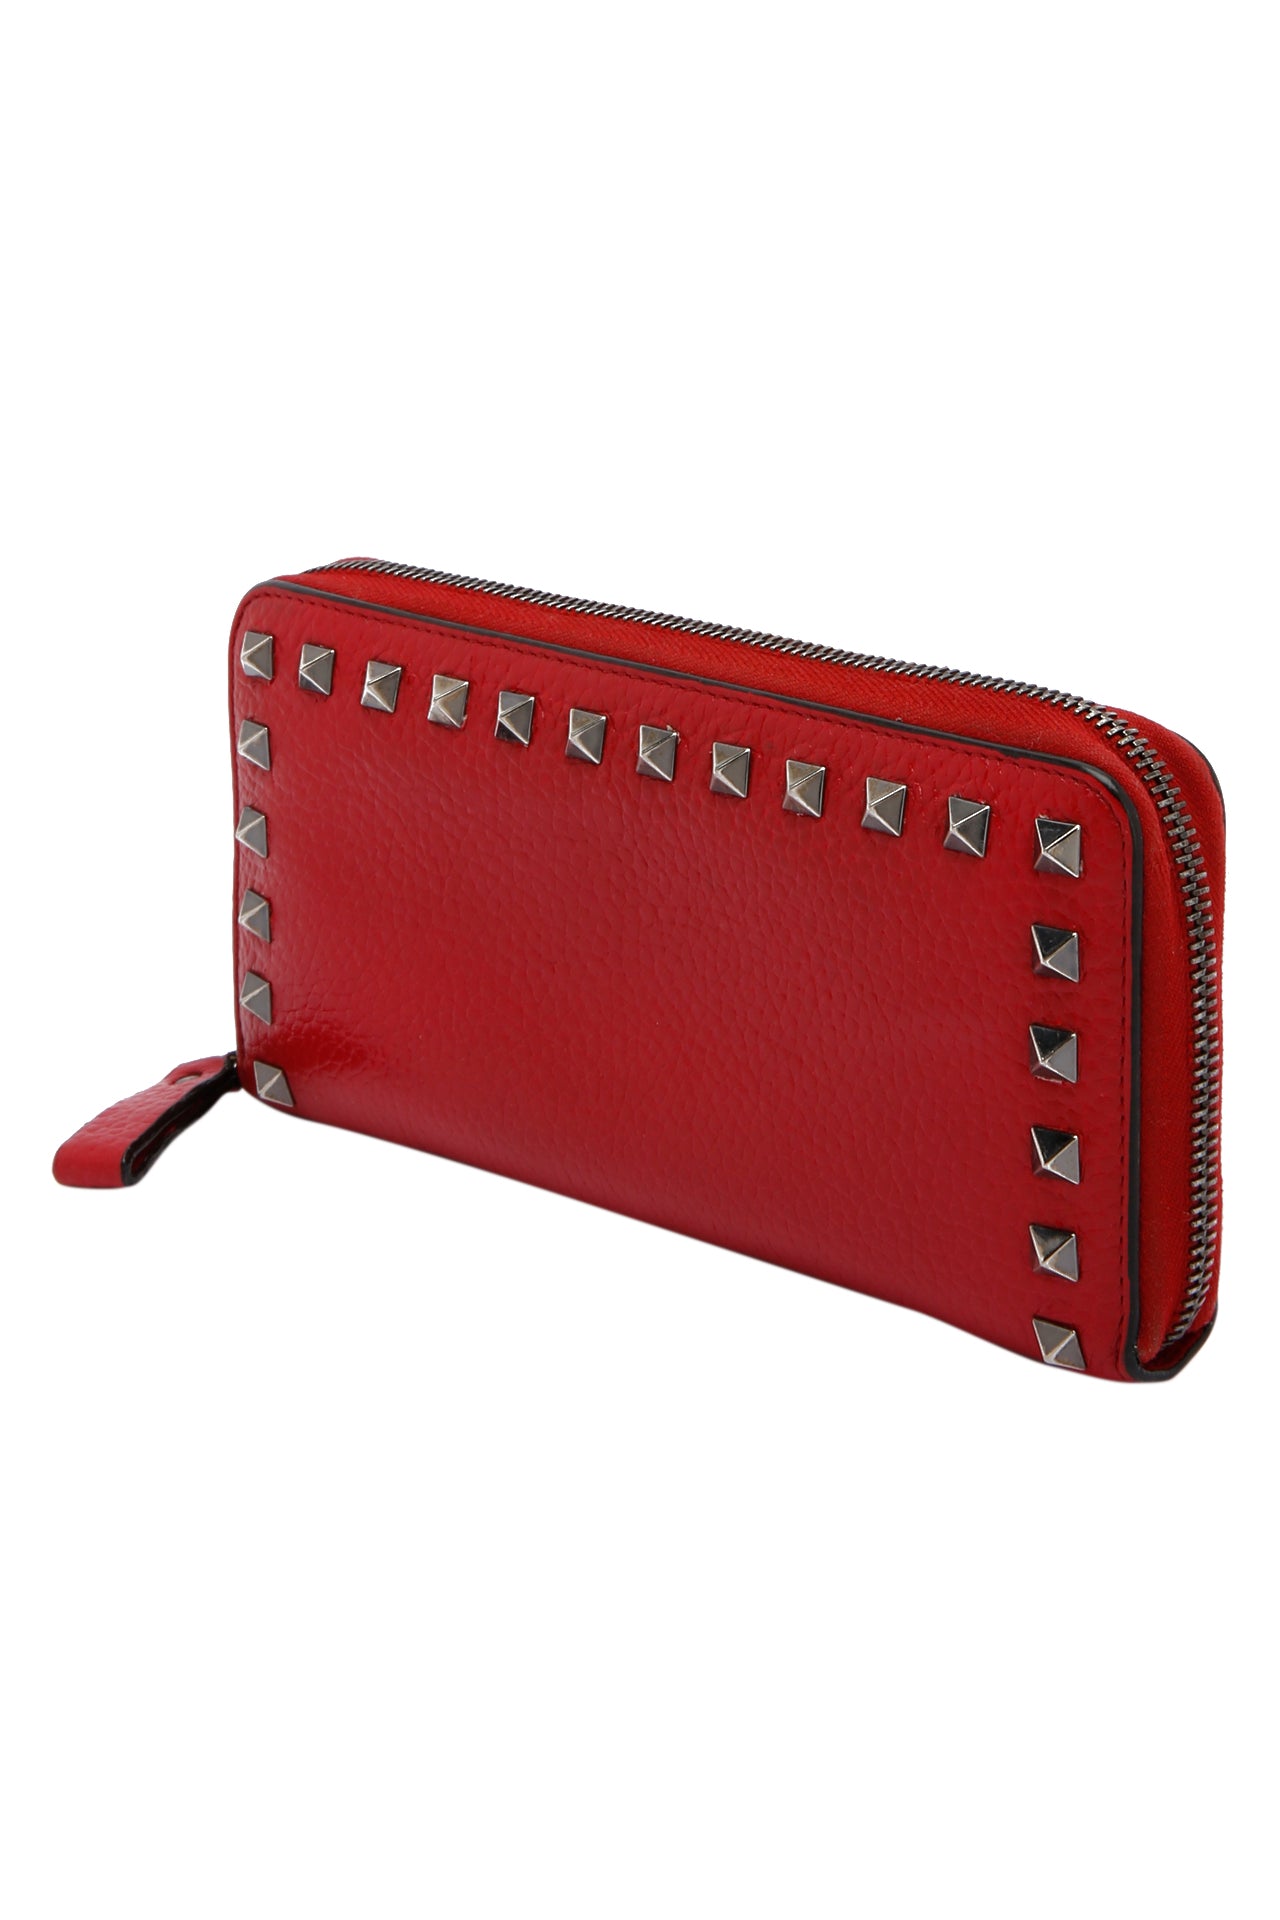 Valentino Large Rockstud Grainy Calfskin Wallet With Zipper